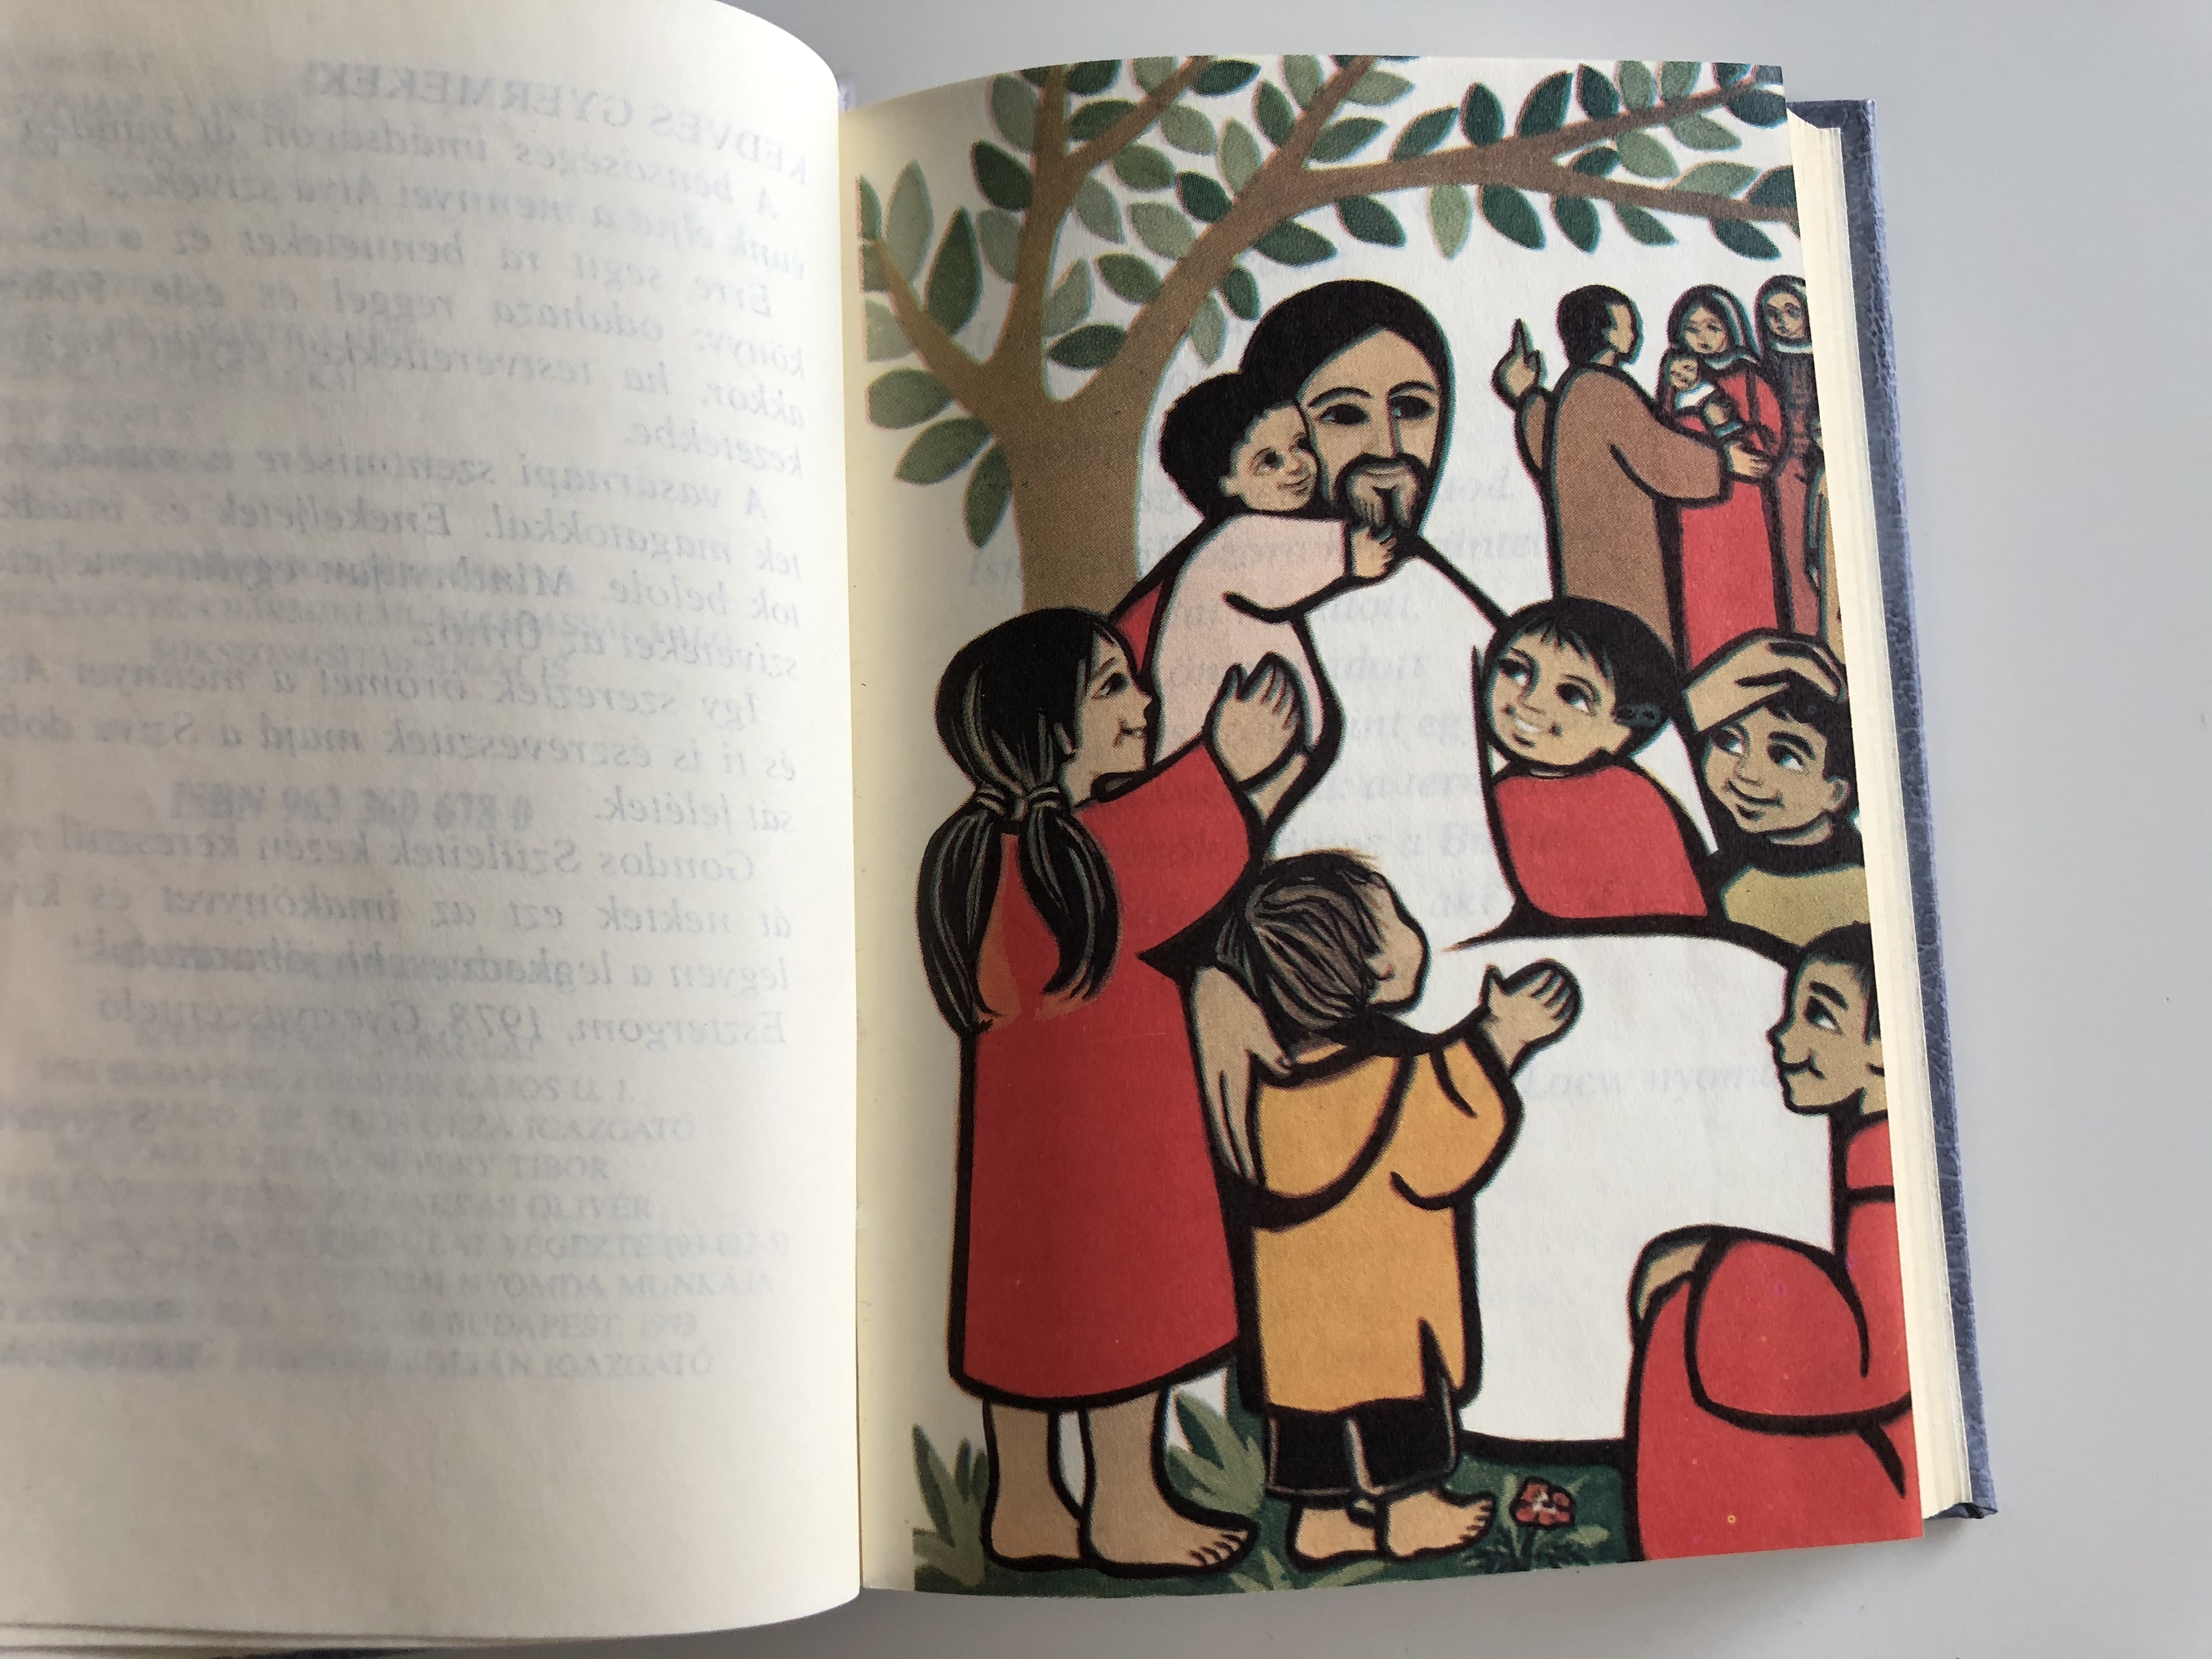 Isten Gyermeke Vagyok - Hungarian Prayer Book and Songbook for Children 1.JPG